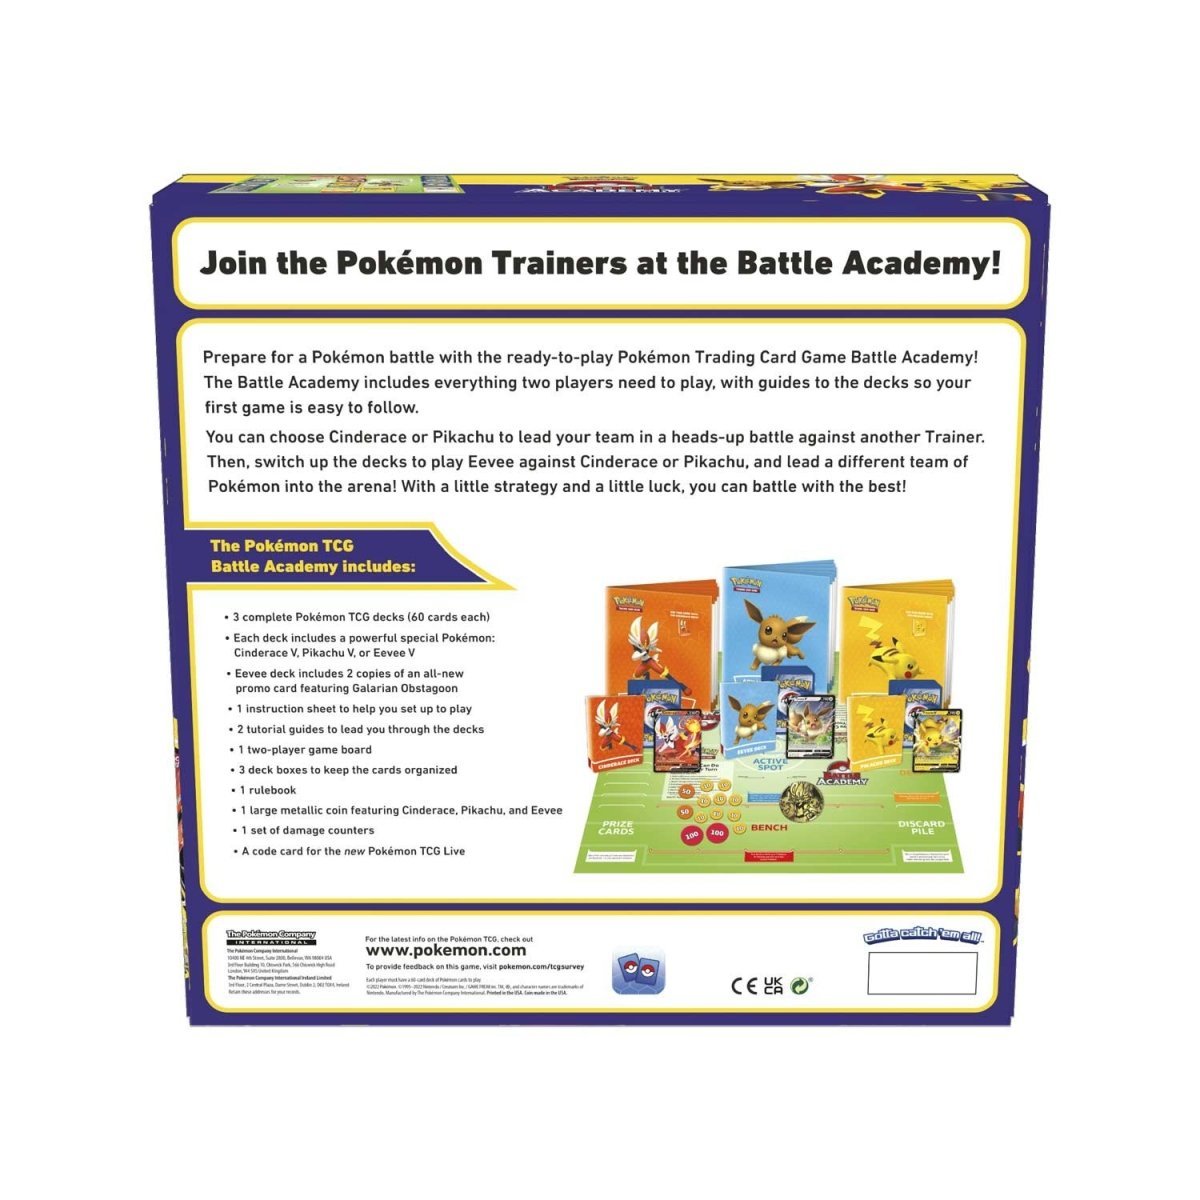 Pokémon Trading Card Game Battle Academy 2022 (Cinderace V, Pikachu V & Eevee V) - PokeRvmCollection Box